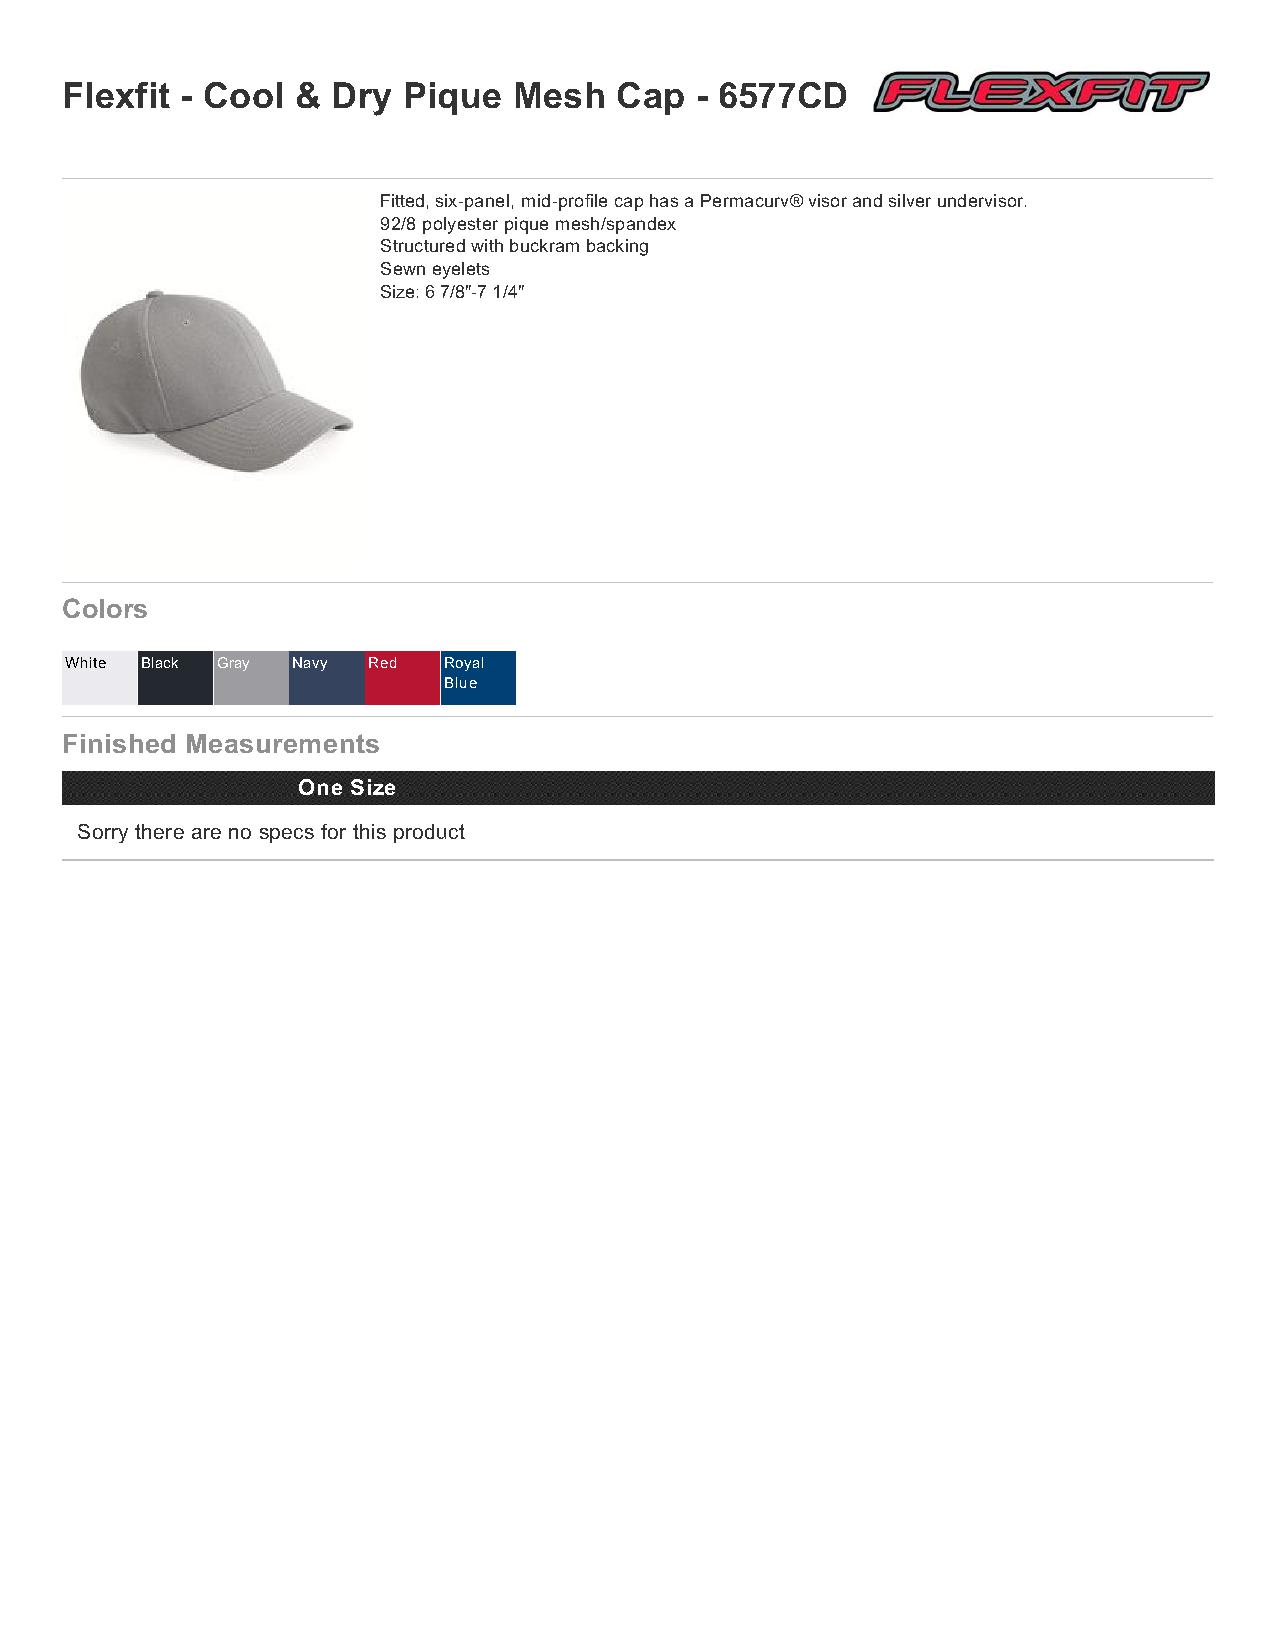 Flexfit 6577CD Cool & Dry Pique Mesh Cap $7.32 - Headwear